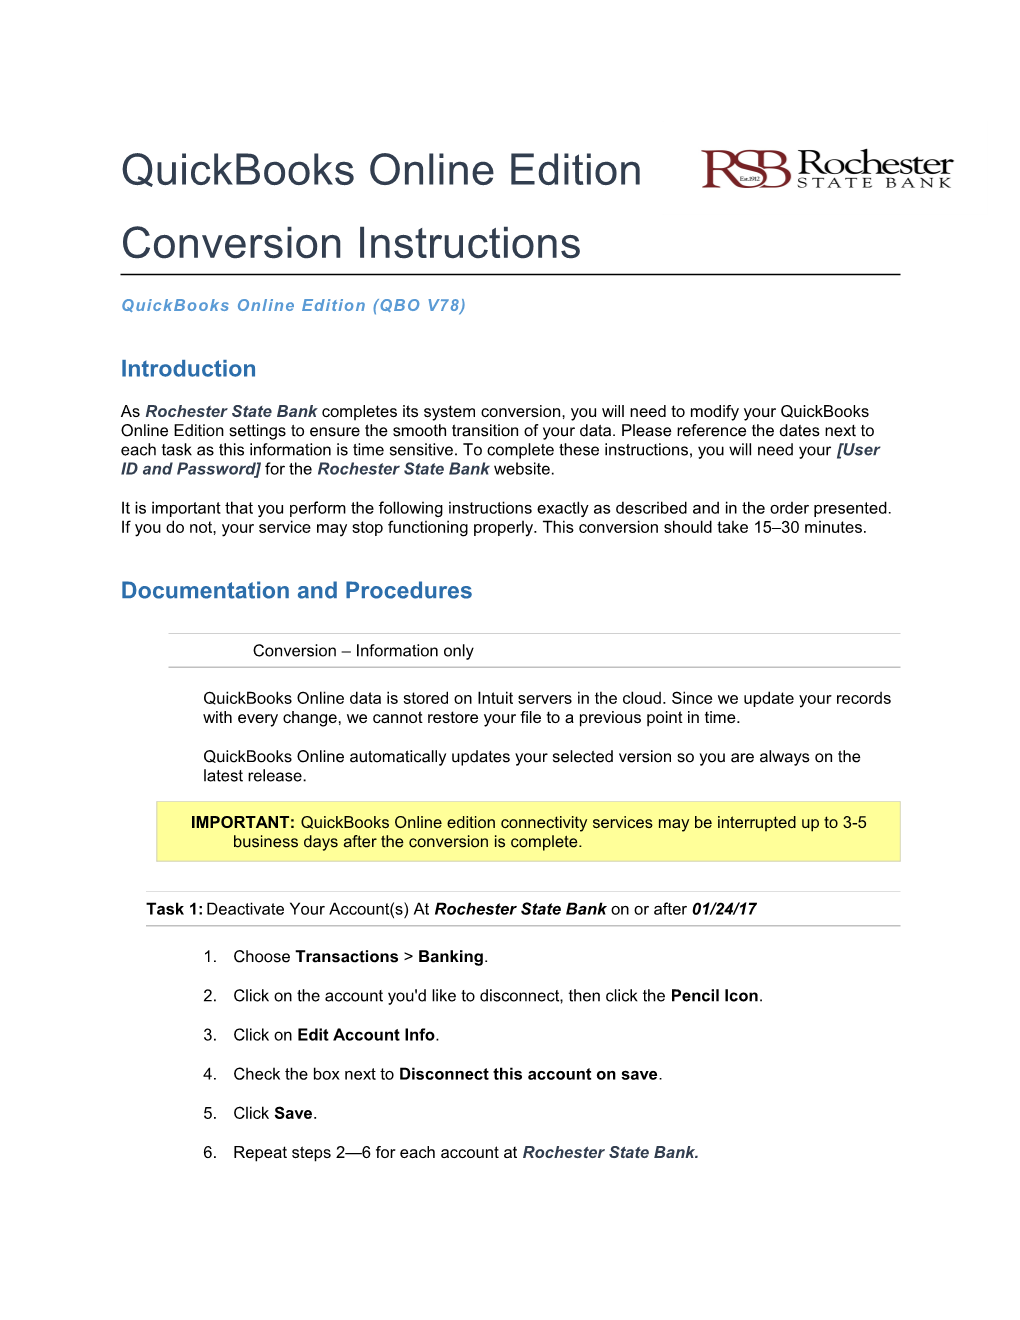 Quickbooks Online Edition (QBO V78)